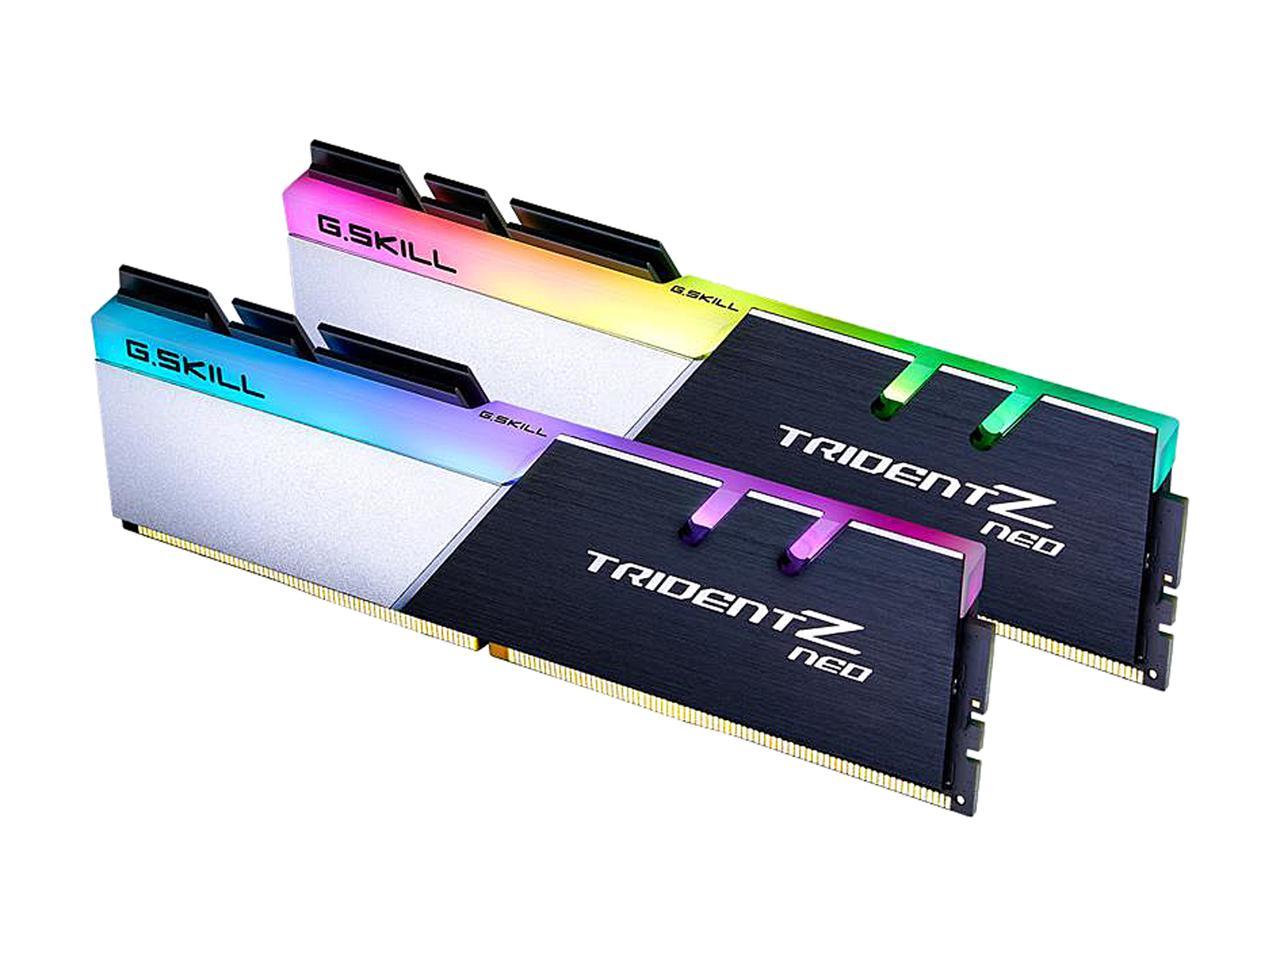 G.SKILL Trident Z Neo (For AMD Ryzen) Series 32GB (2 x 16GB) 288-Pin RGB DDR4 SDRAM DDR4 3000 (PC4 24000) Desktop Memory Model F4-3000C16D-32GTZN